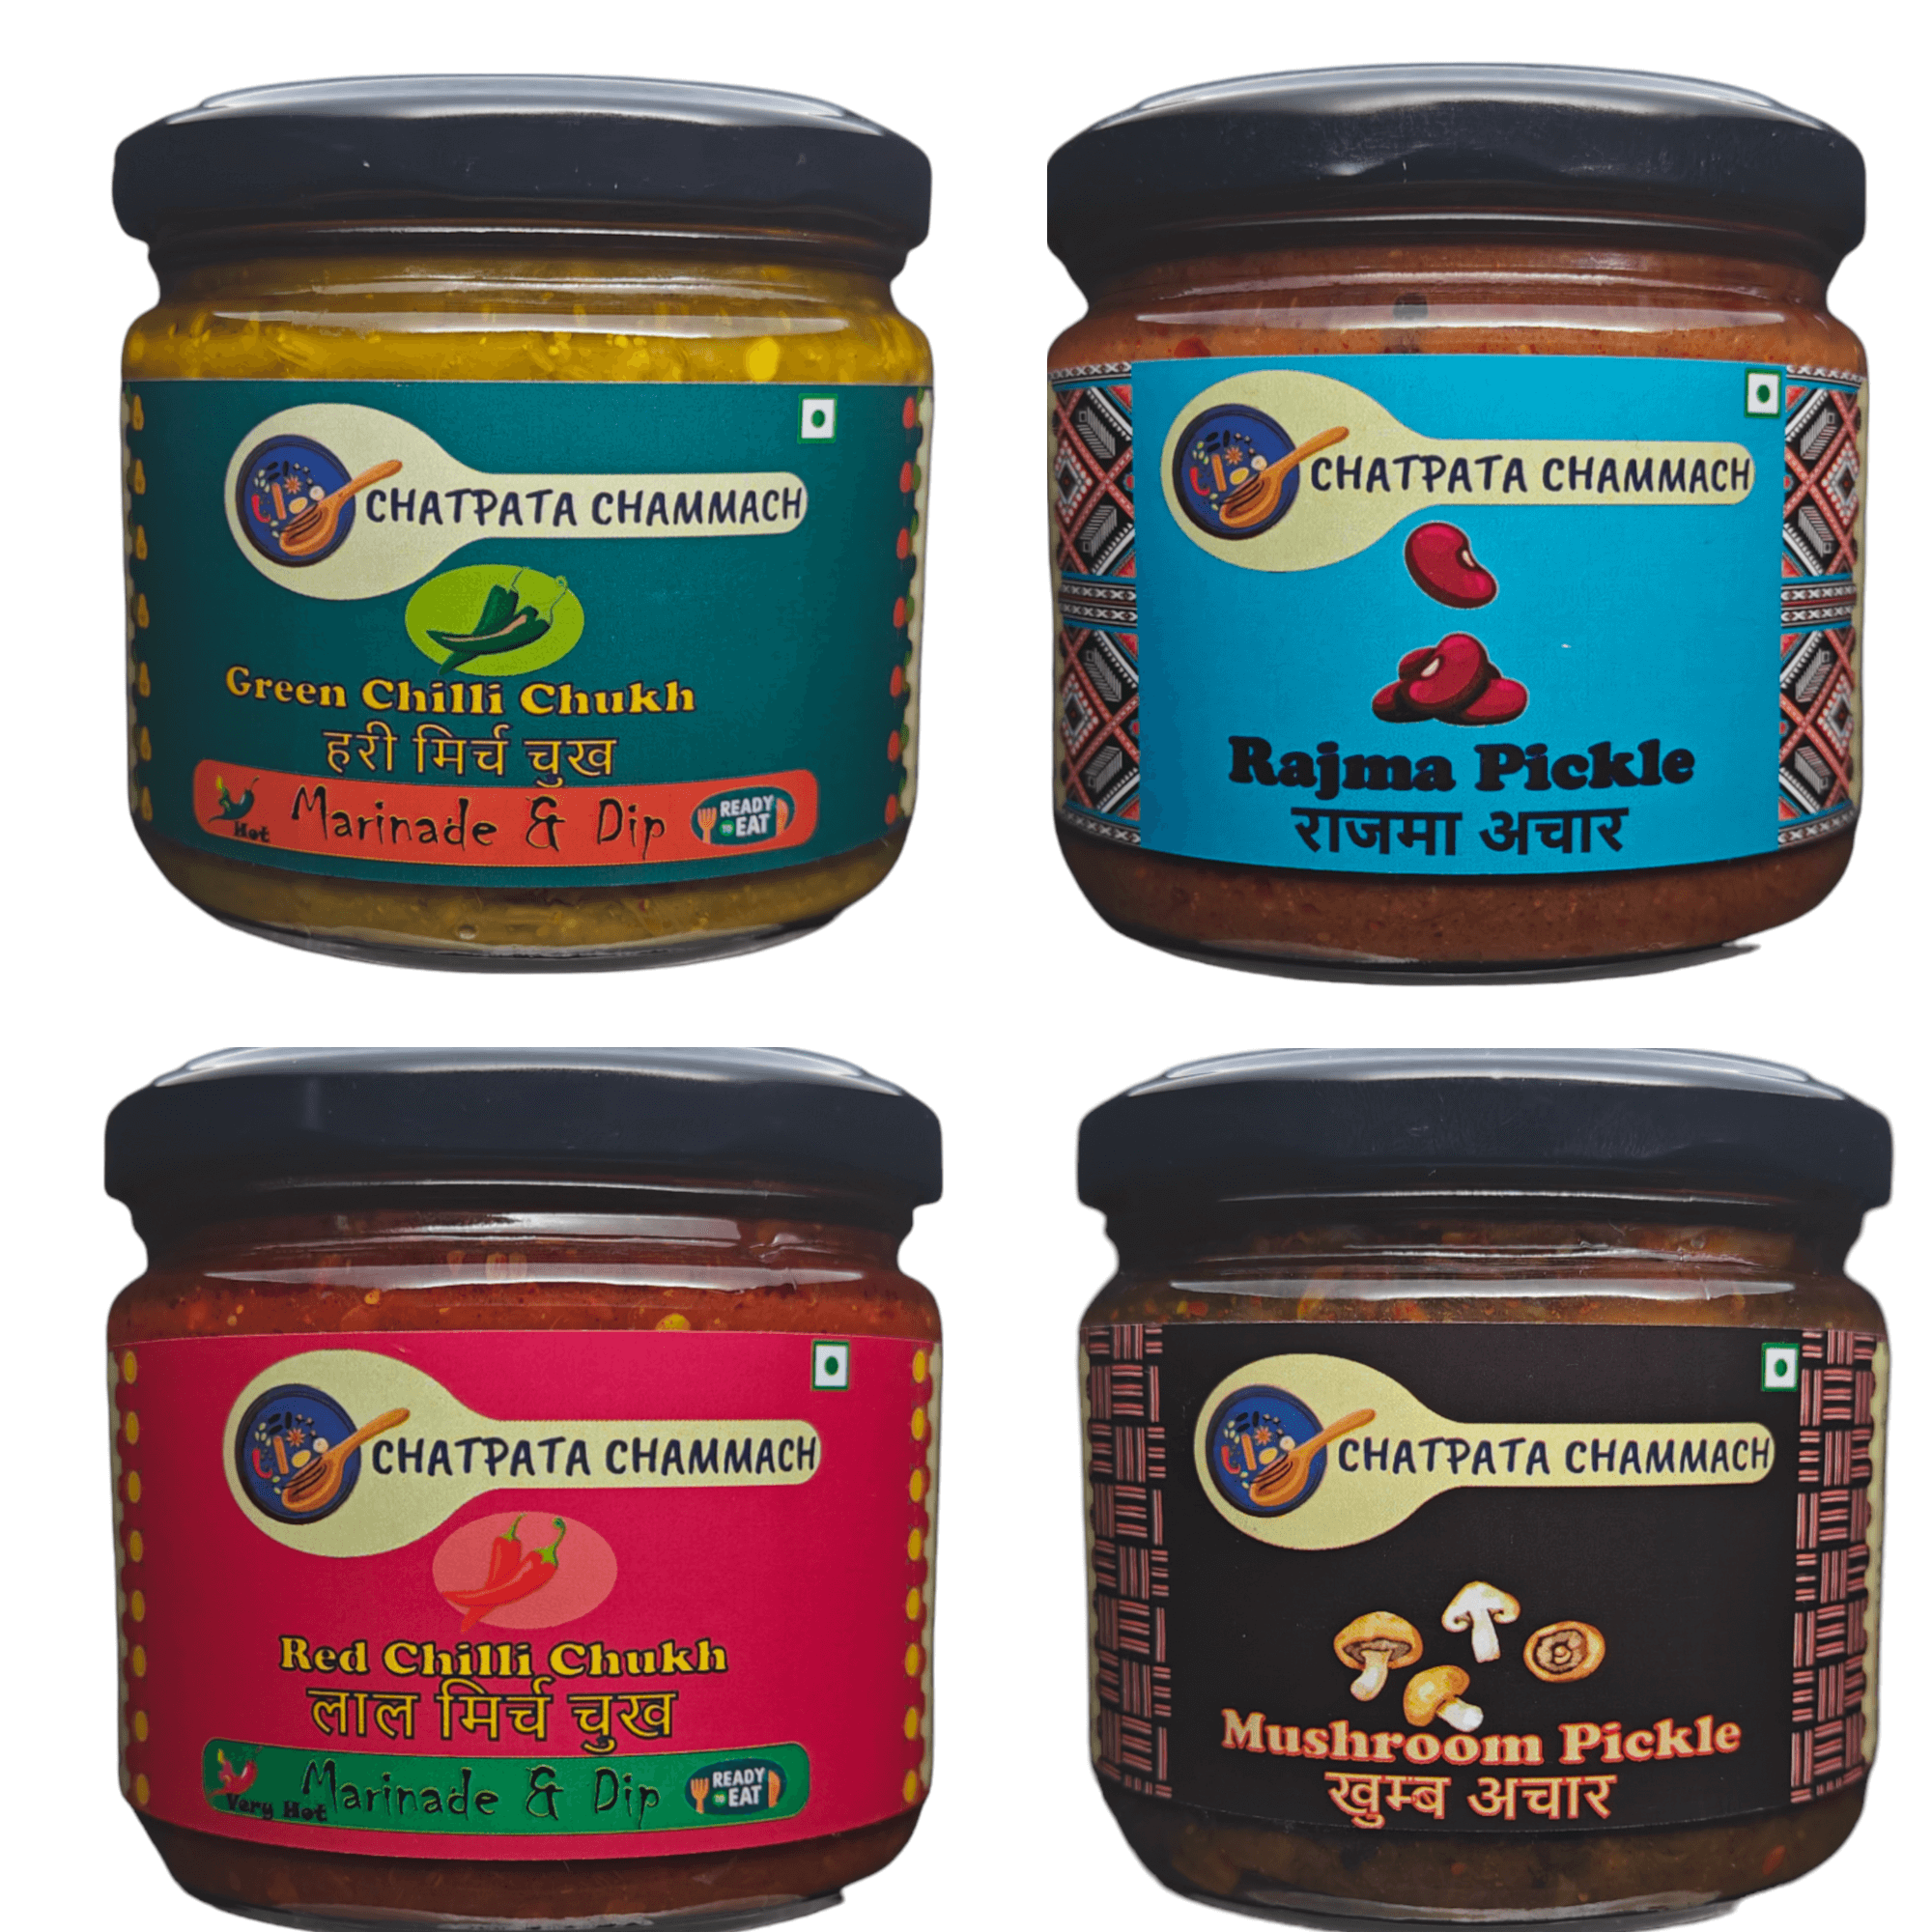 Himachali Chatkare Combo (Pack of Rajma pickle, Mushroom Pickle, Red chilli chukh, Green chilli chukh)